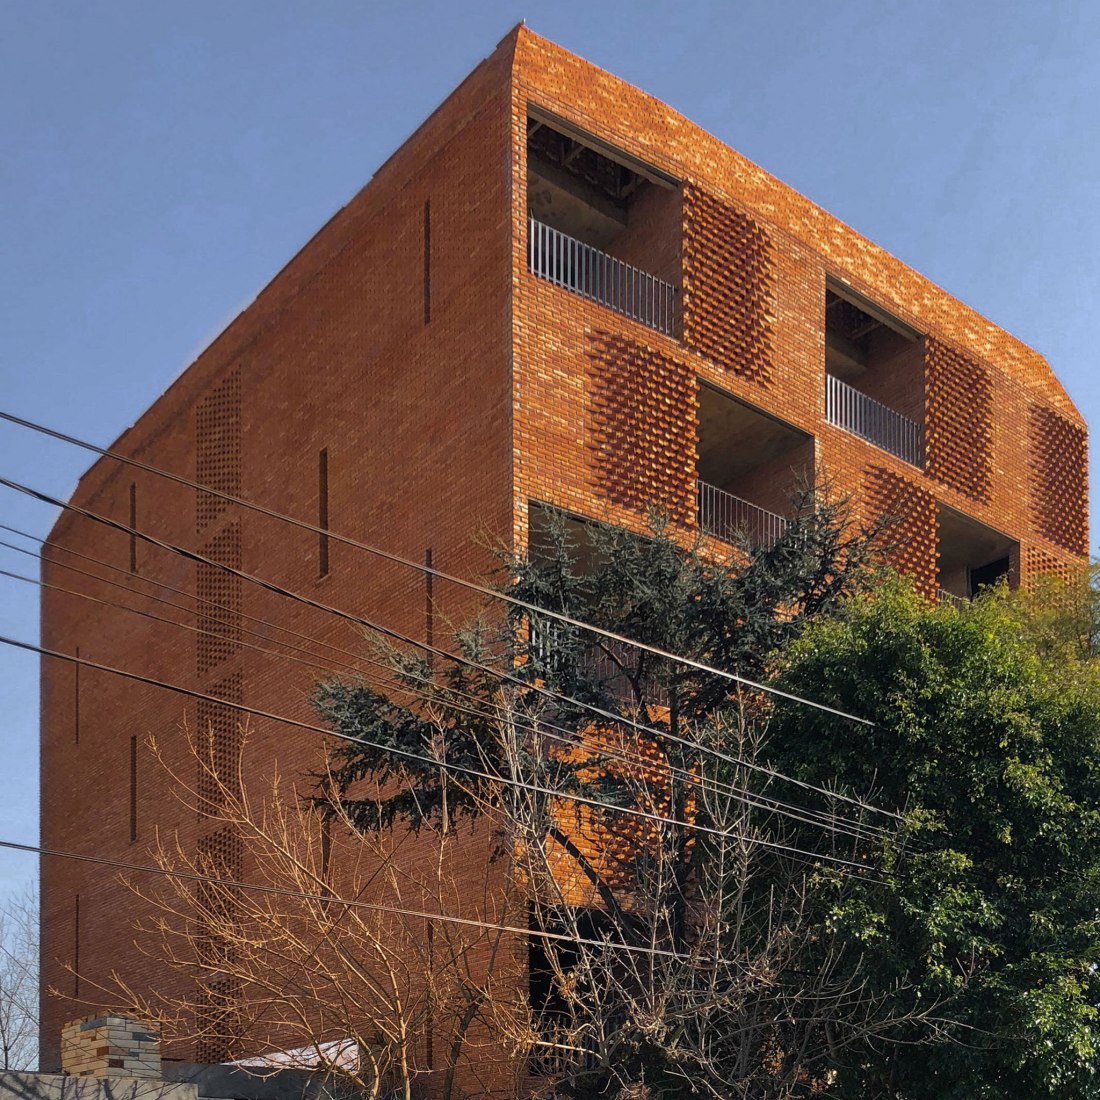 Damero building by Francisco Cadau Oficina de Arquitectura. Photograph courtesy of the studio.